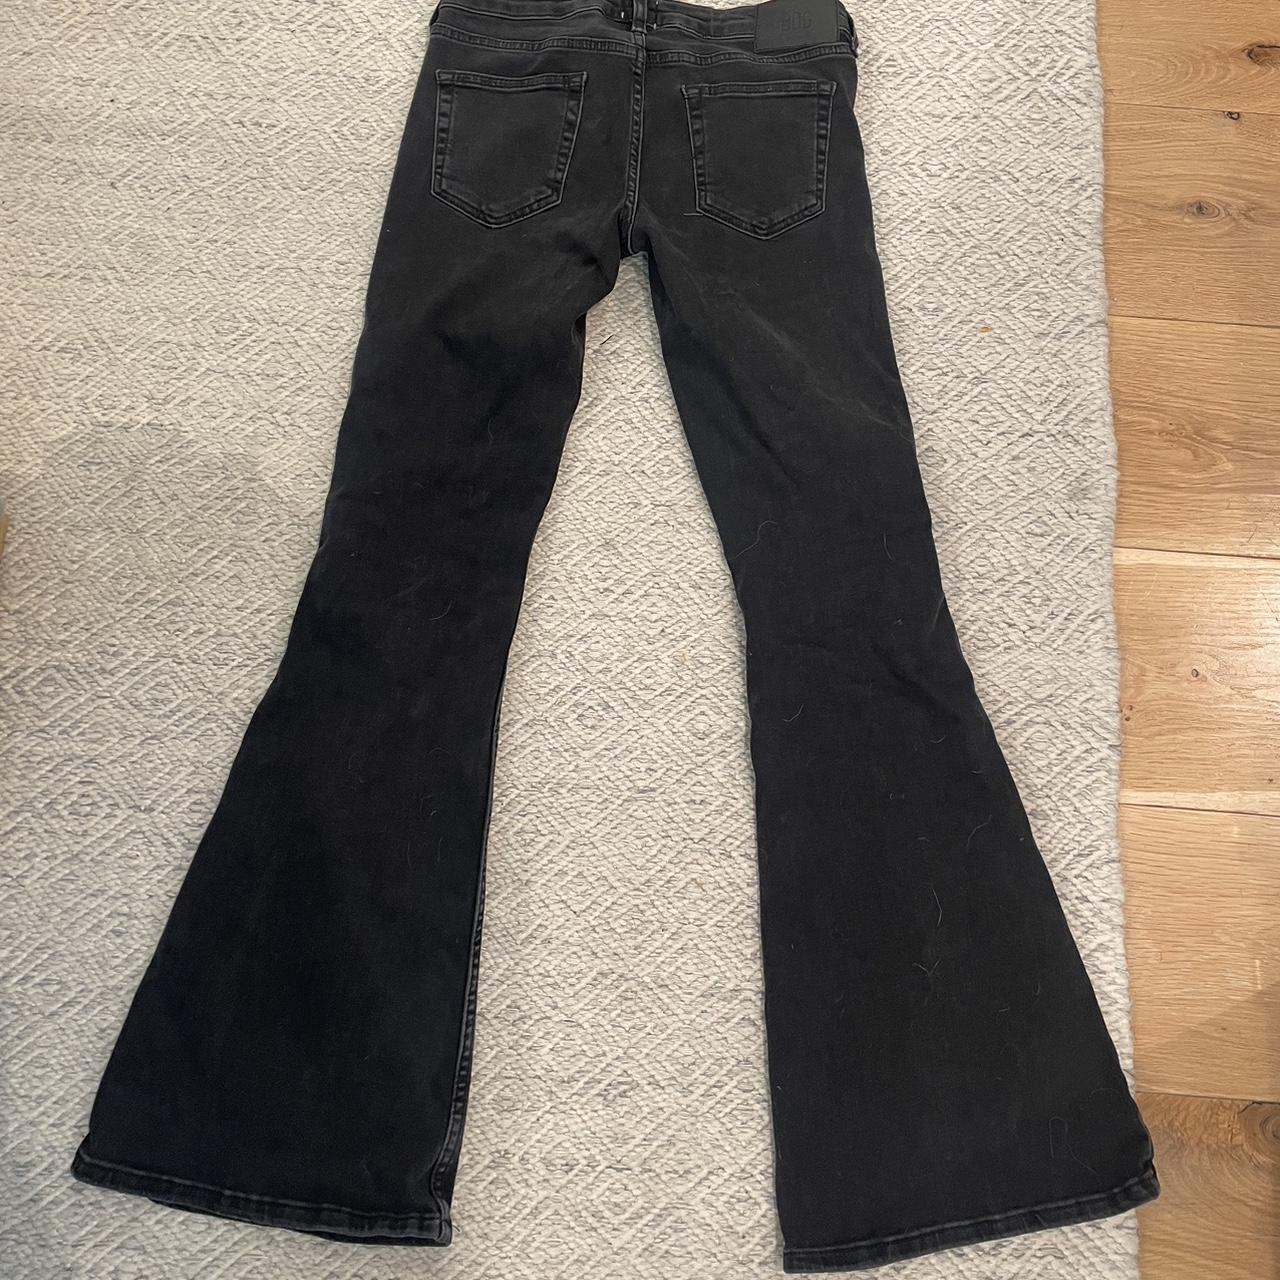 Black BDG lowrise flare jeans the waist measurement... - Depop